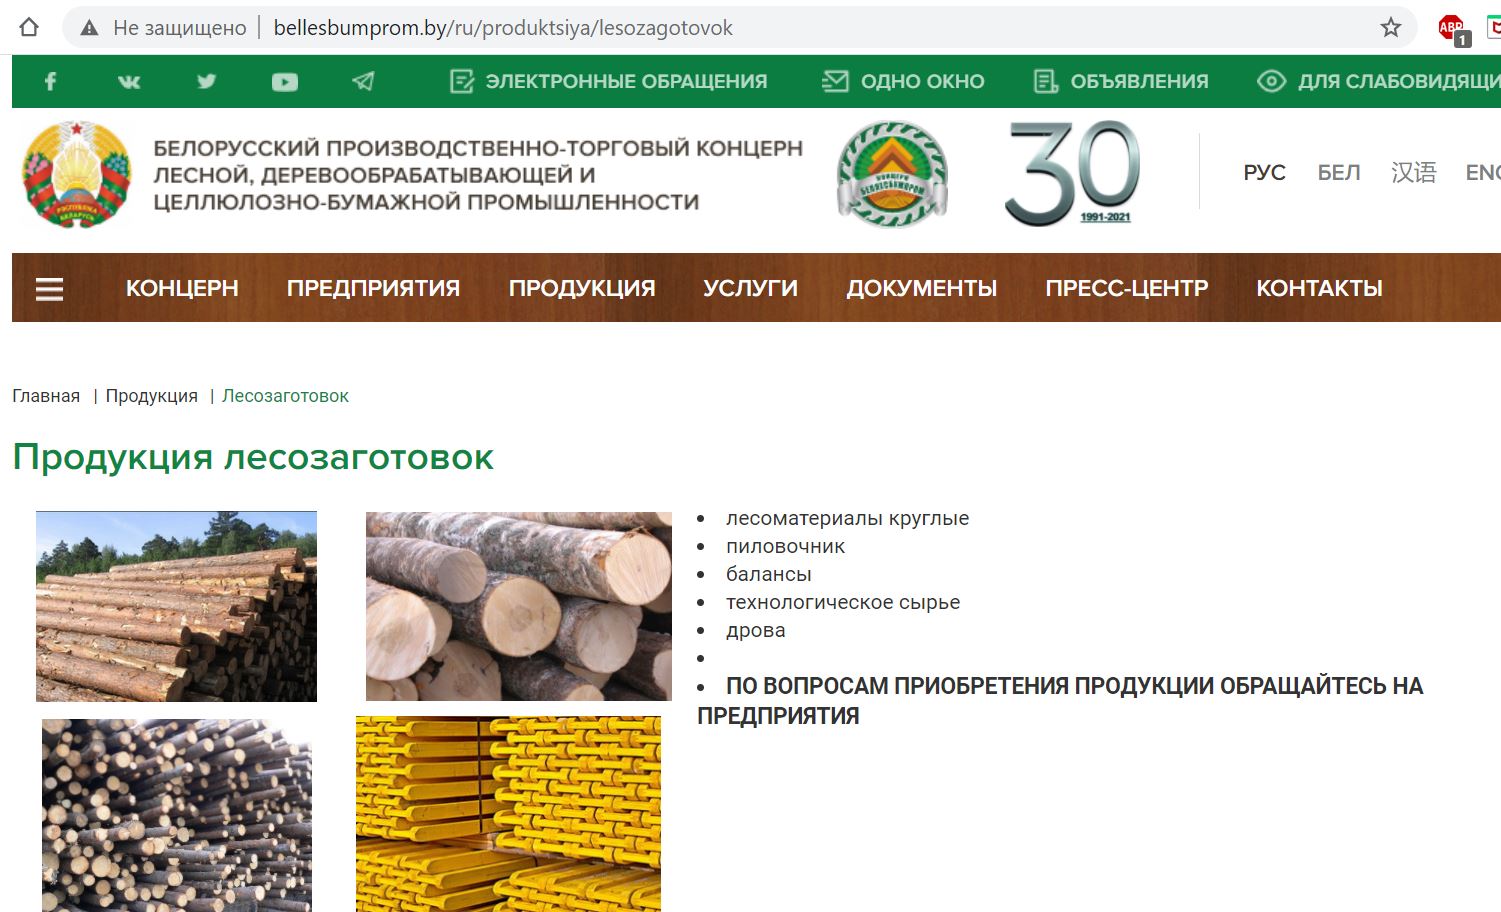 За 20 лет вырубка кругляка в Беларуси выросла в 4-5 раз